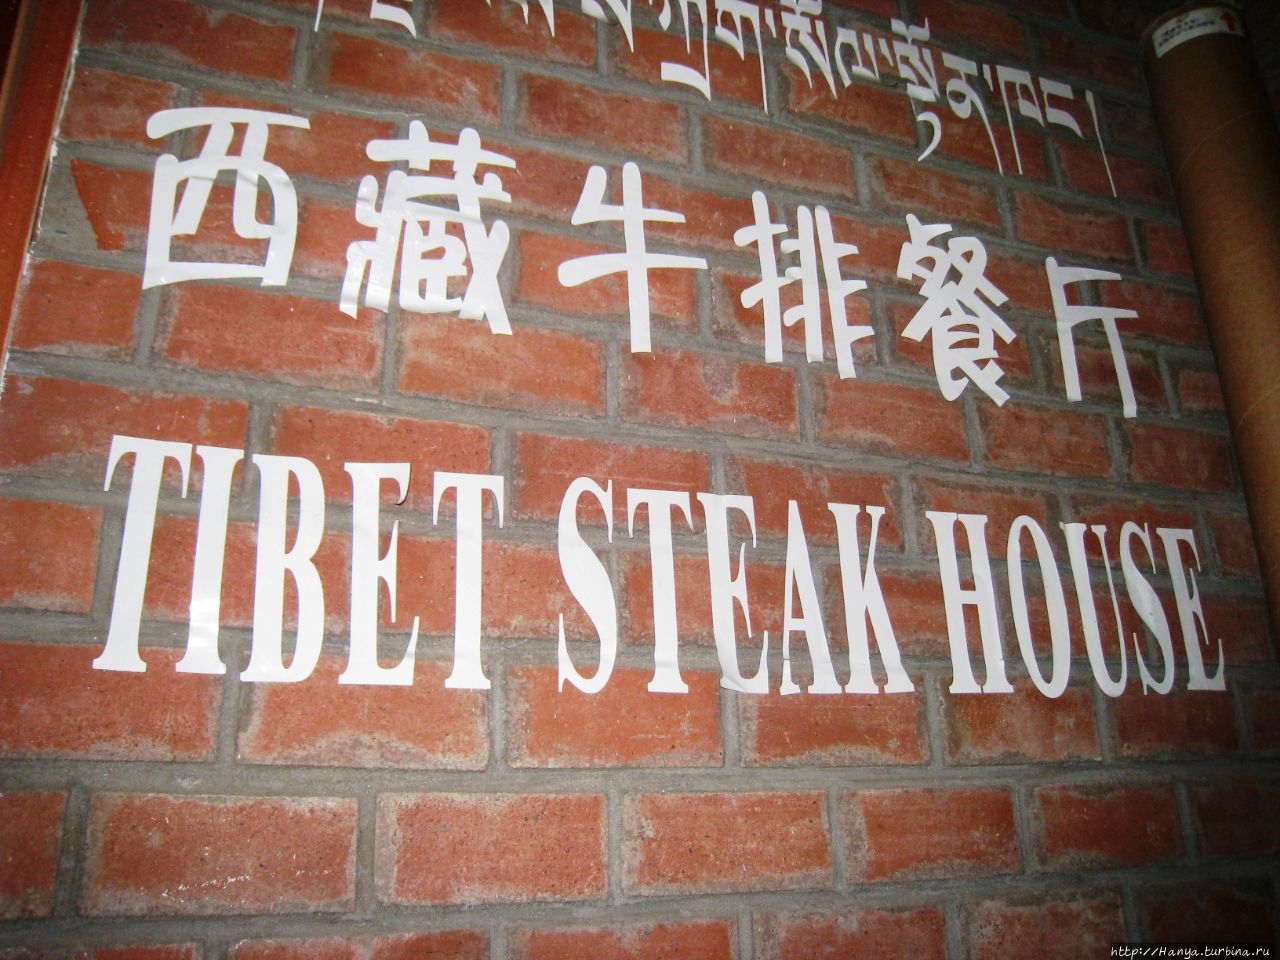 Ресторан Tibet Steak House Лхаса, Китай